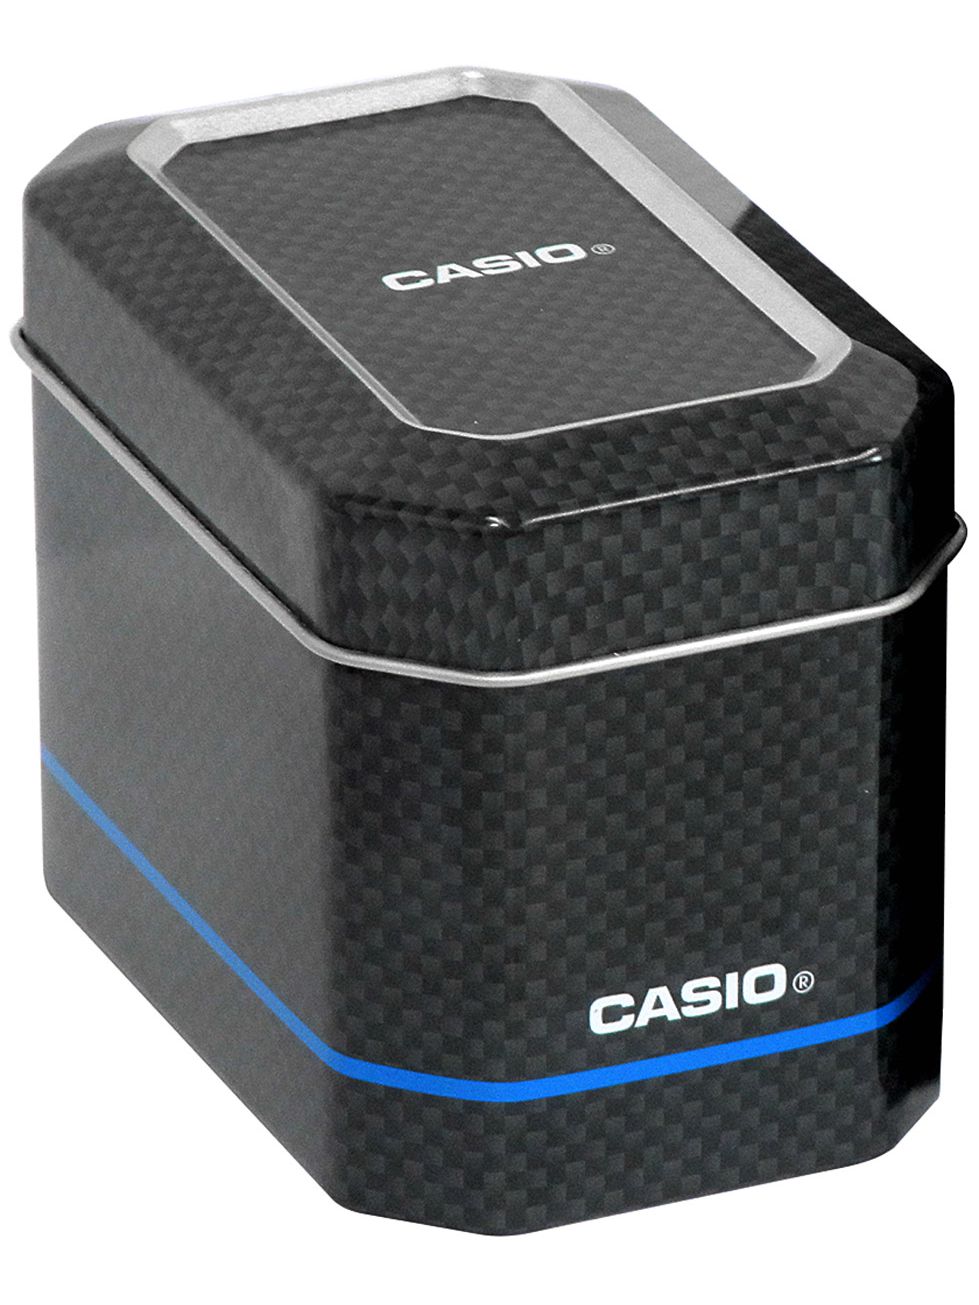 Casio Funk-Solar-Herrenuhr Titan LCW-M100TSE-1A2ER • uhrcenter